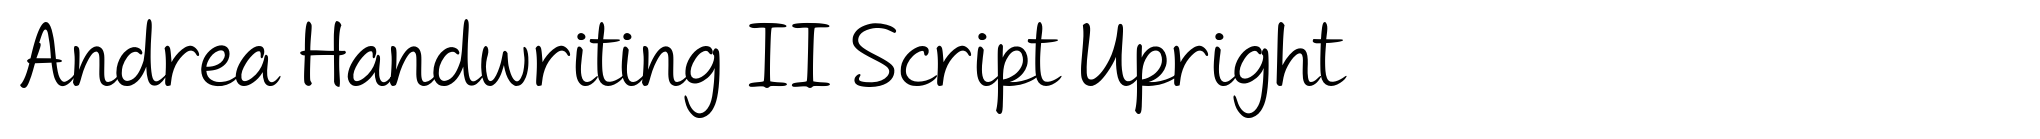 Andrea Handwriting II Script Upright image